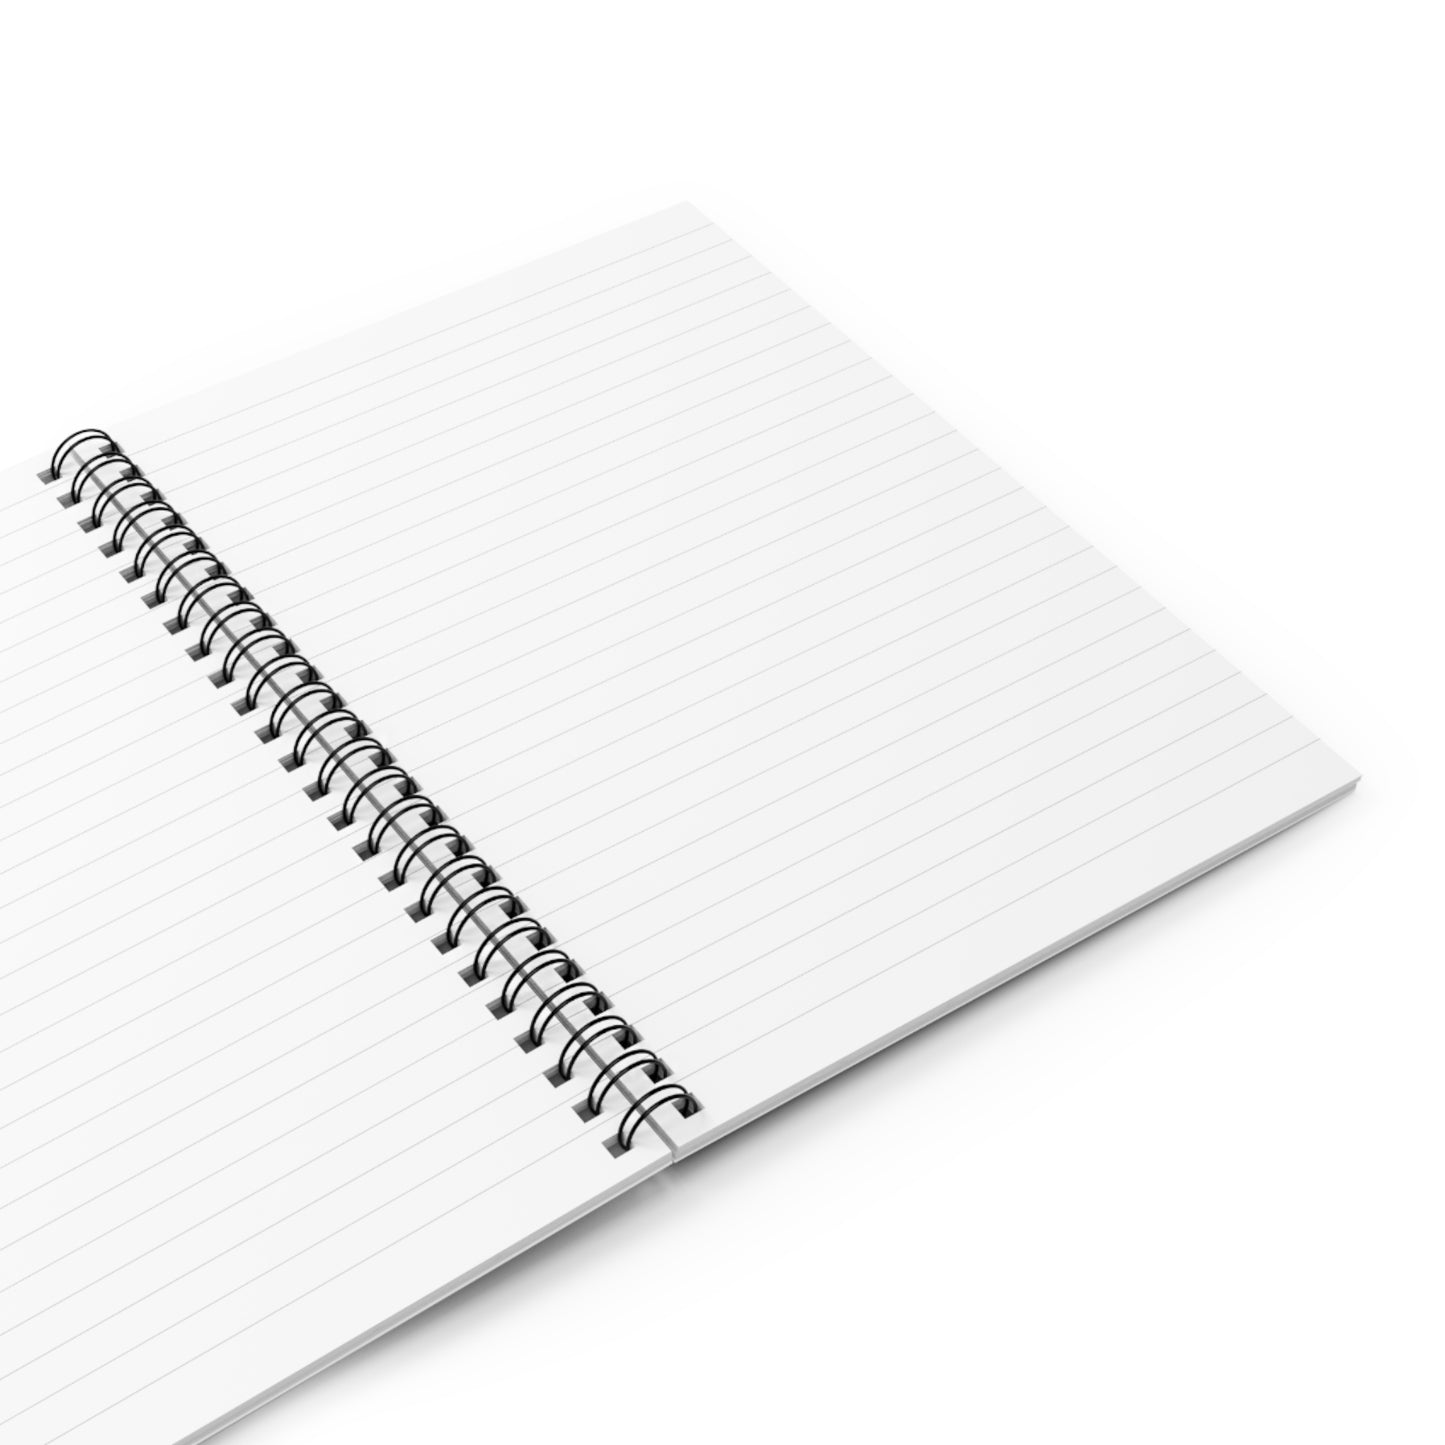 HIPAA notebook